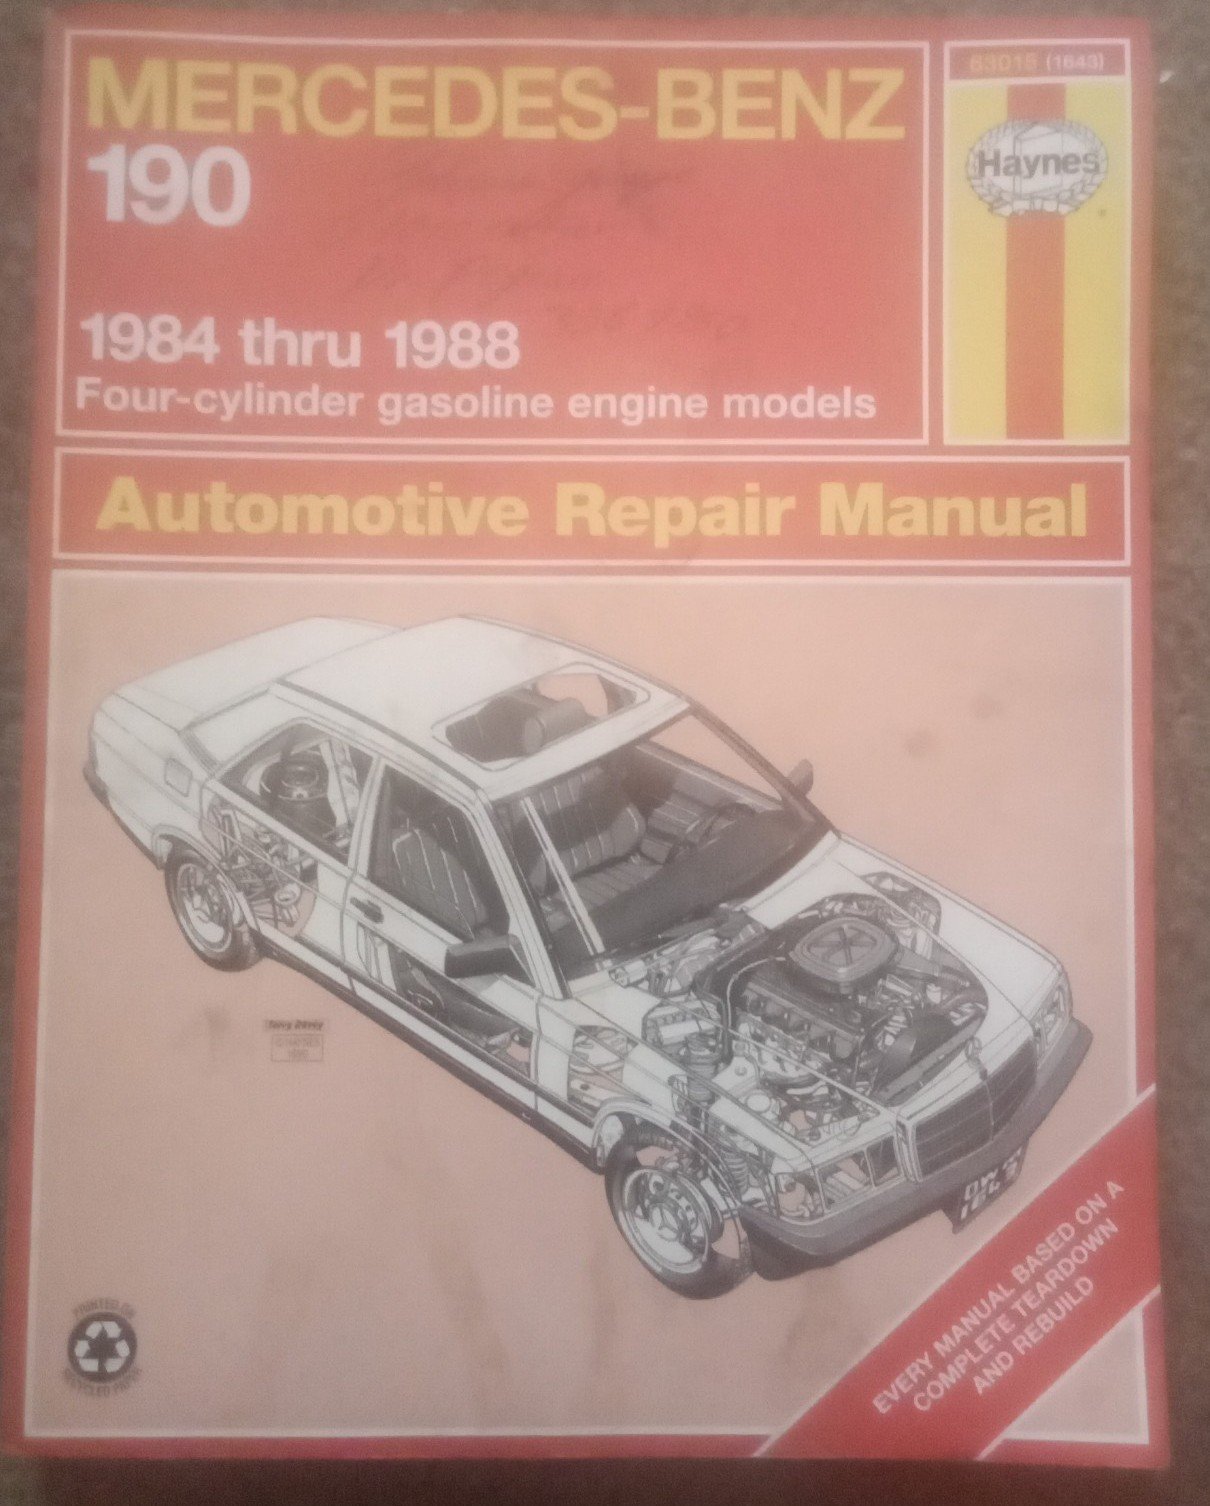 Haynes Repair Manual ah8yiKrKX